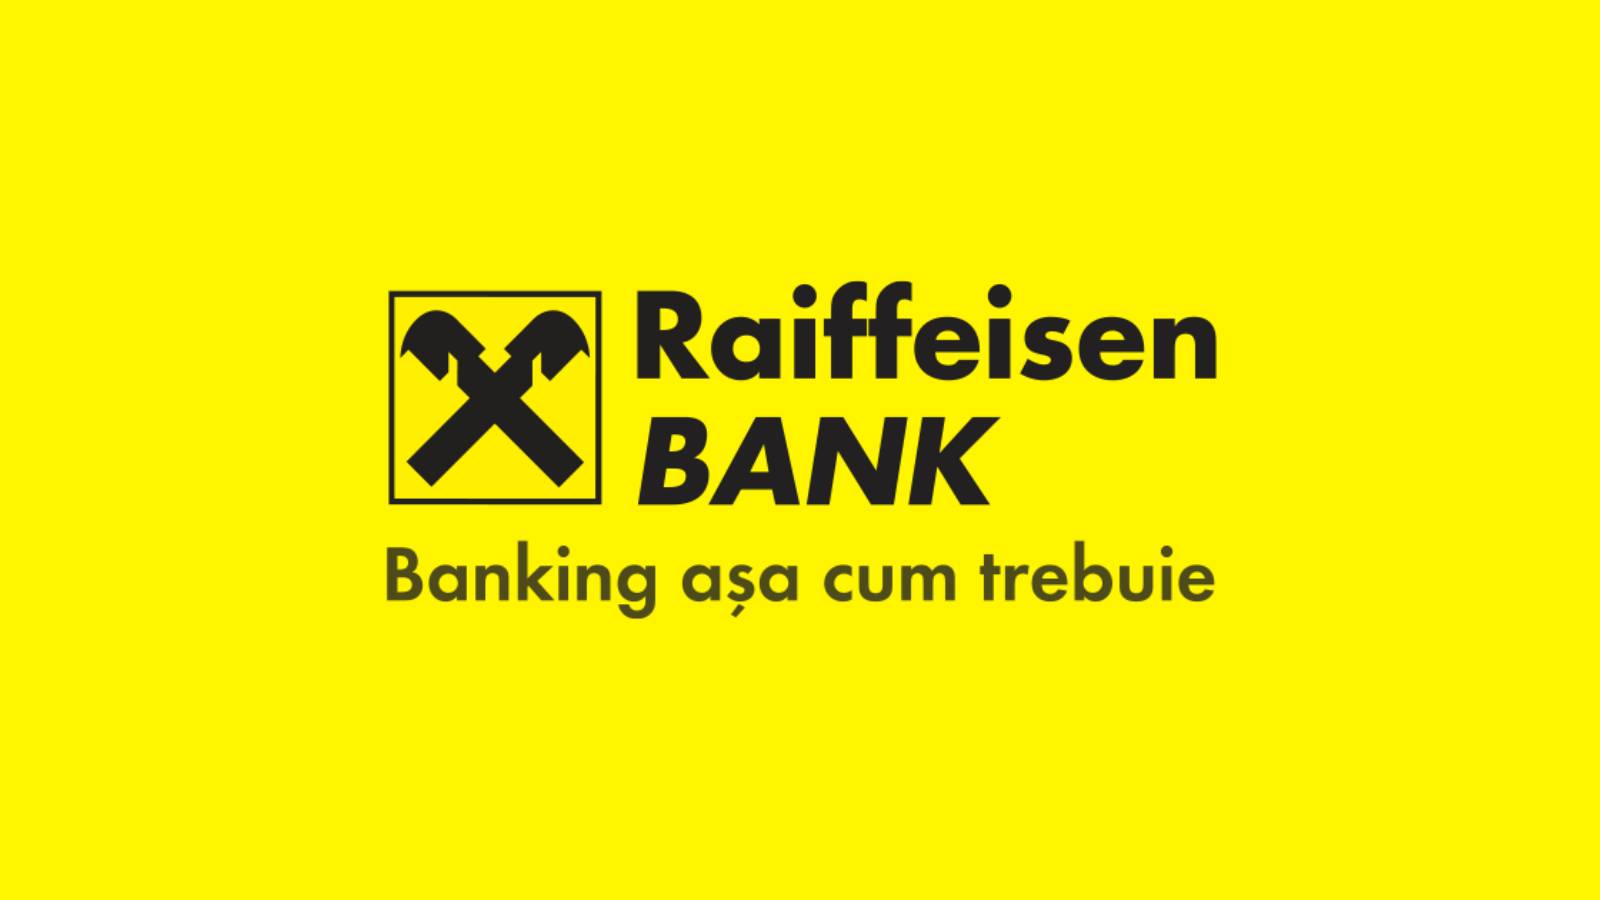 Raiffeisen Bank work